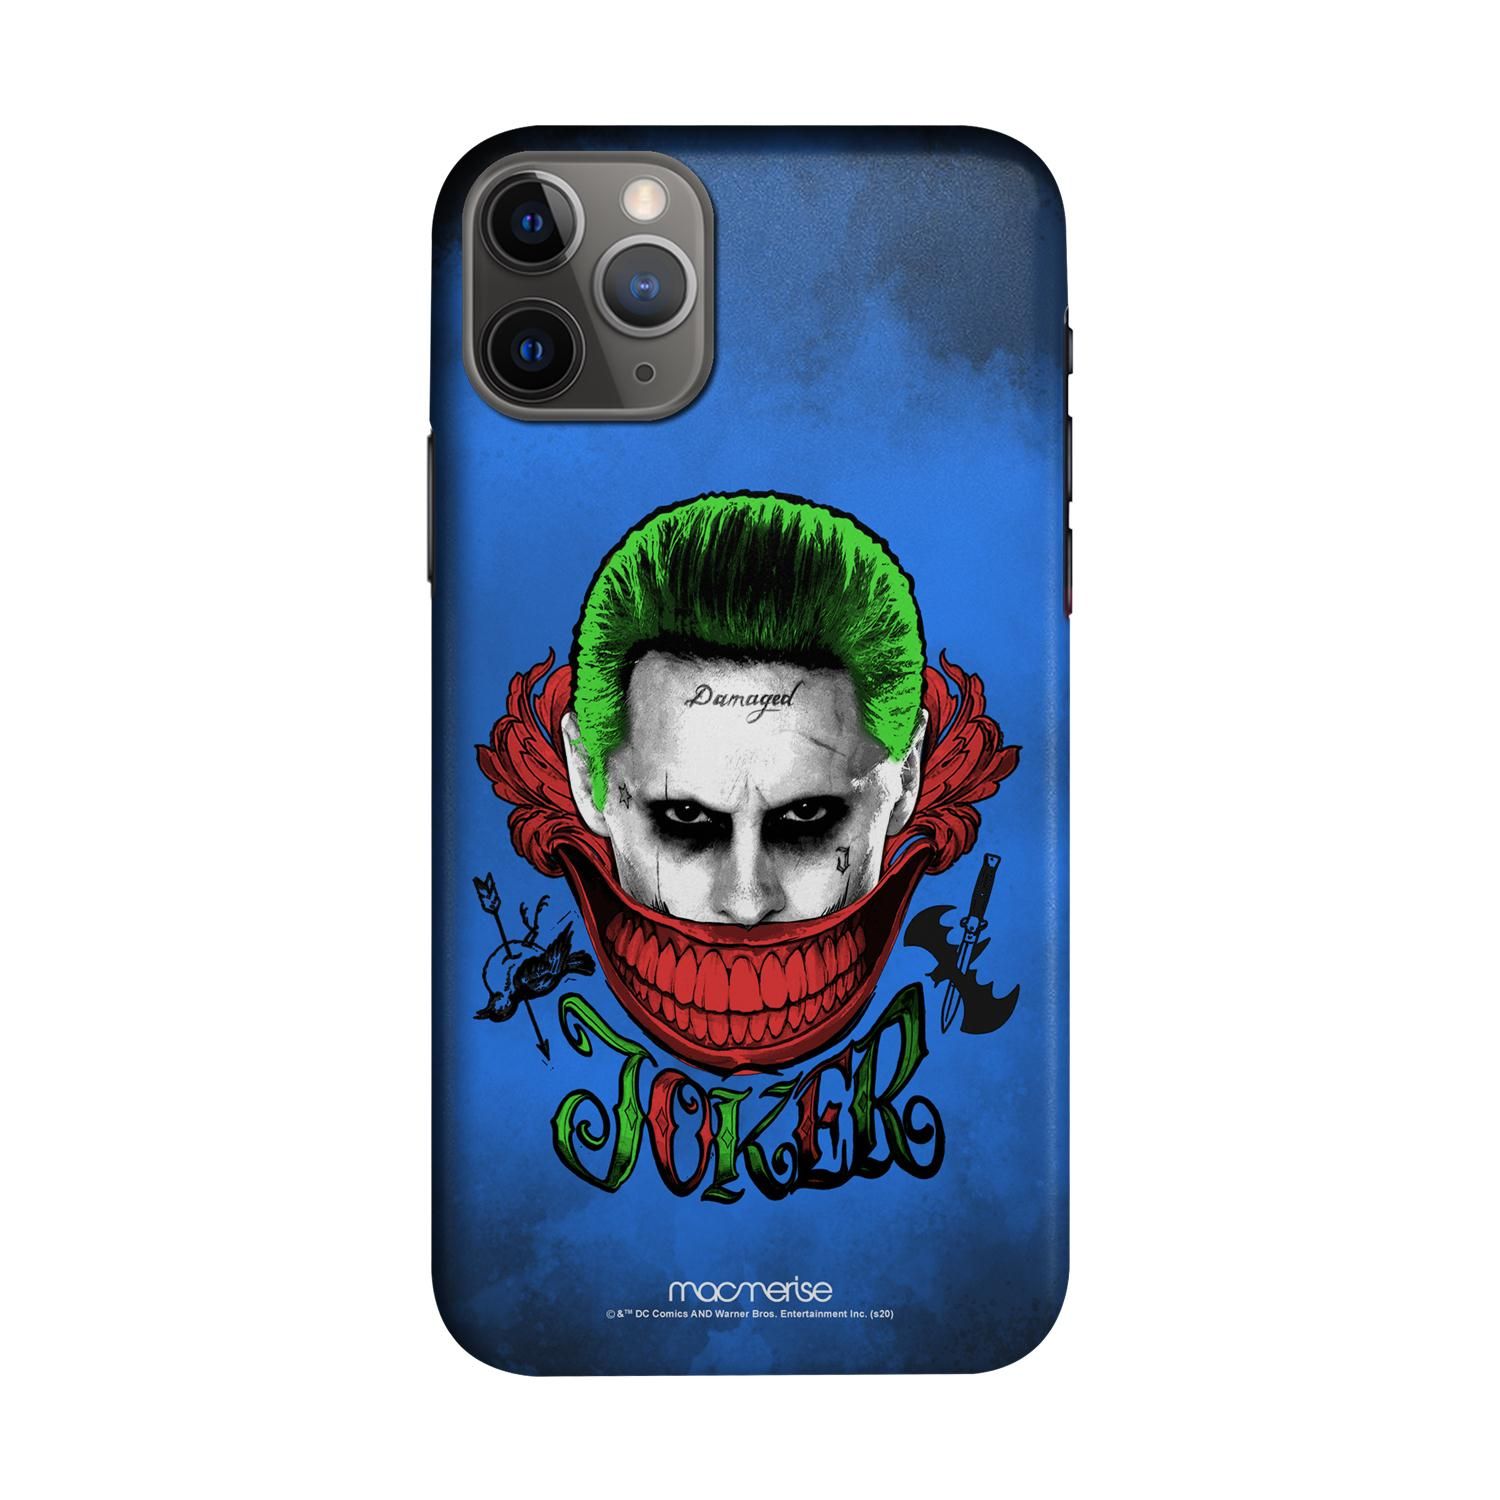 Buy Damaged Joker - Sleek Phone Case for iPhone 11 Pro Max Online